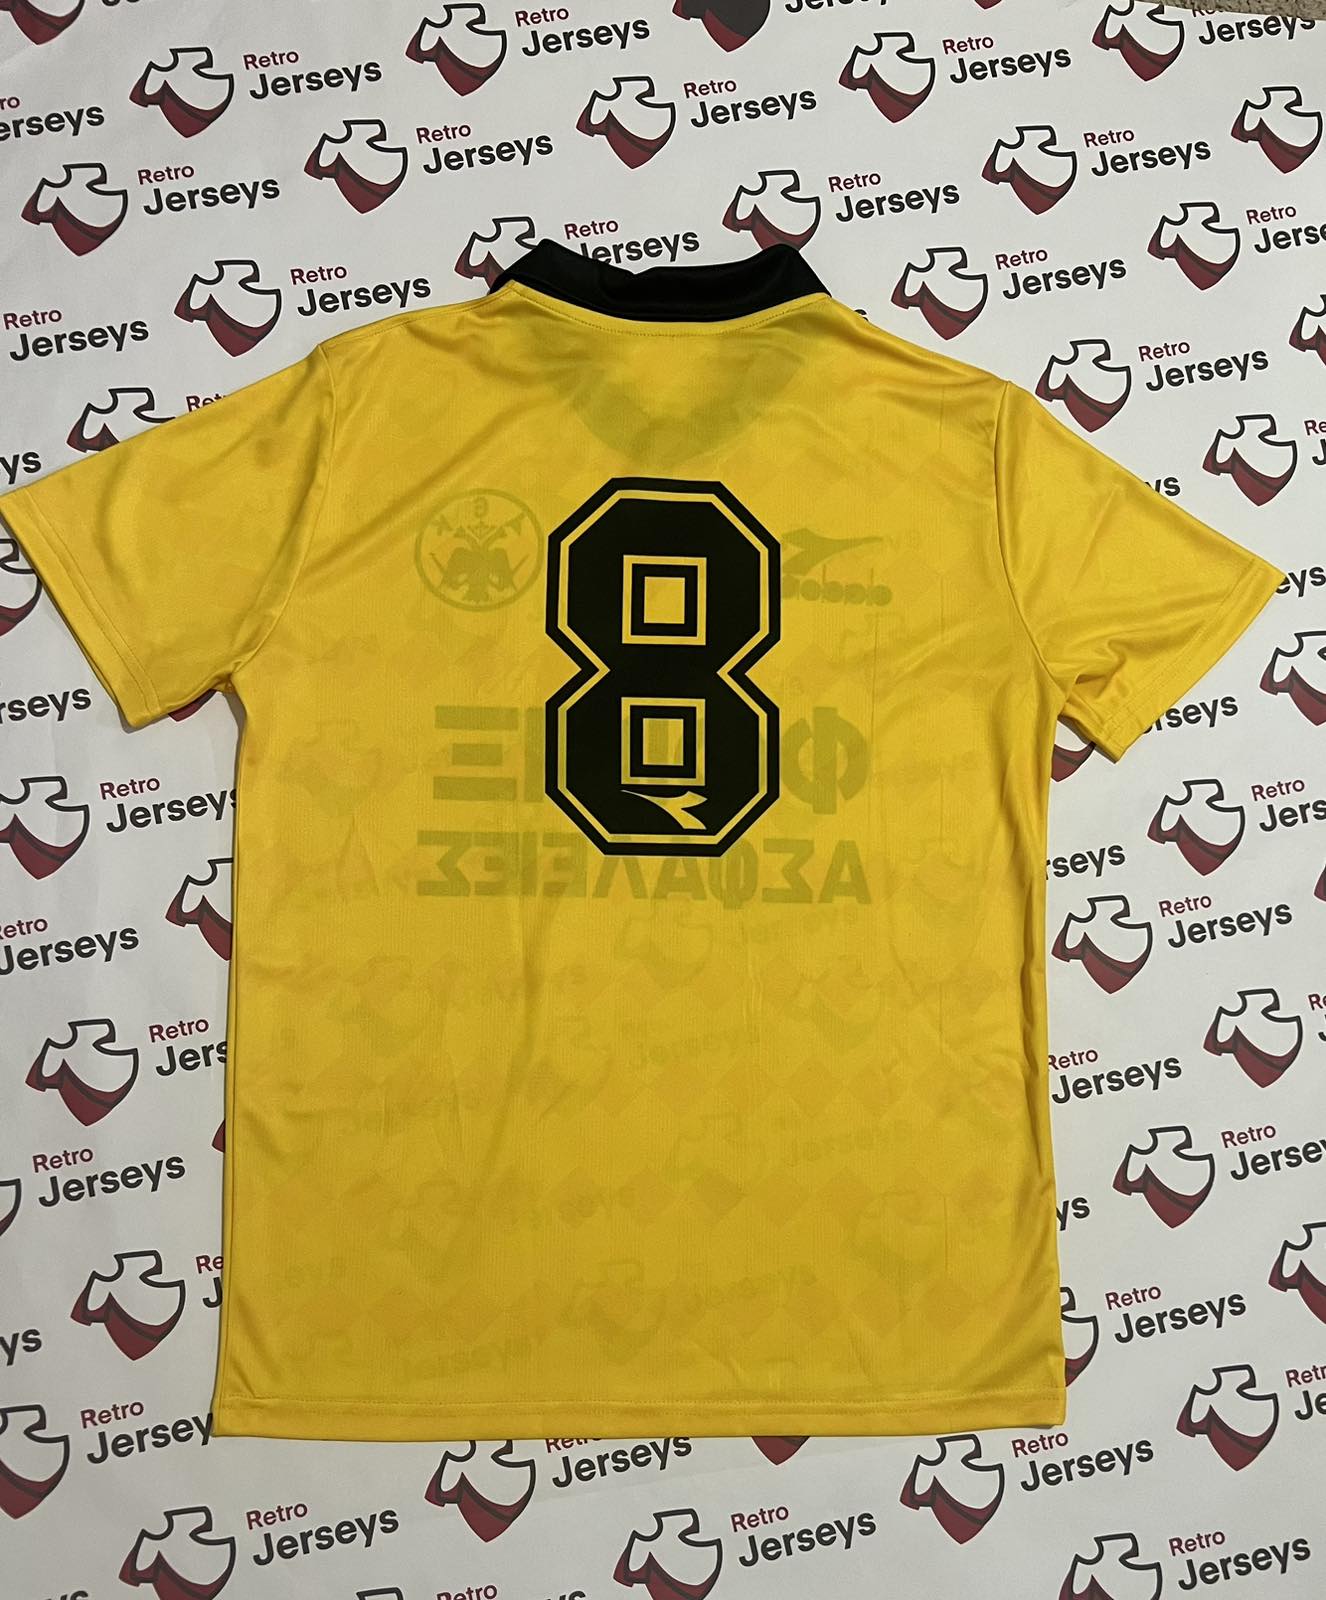 AEK Athens Shirt 1990-1991 Home - Retro Jerseys, φανέλα αεκ - Retro Jerseys